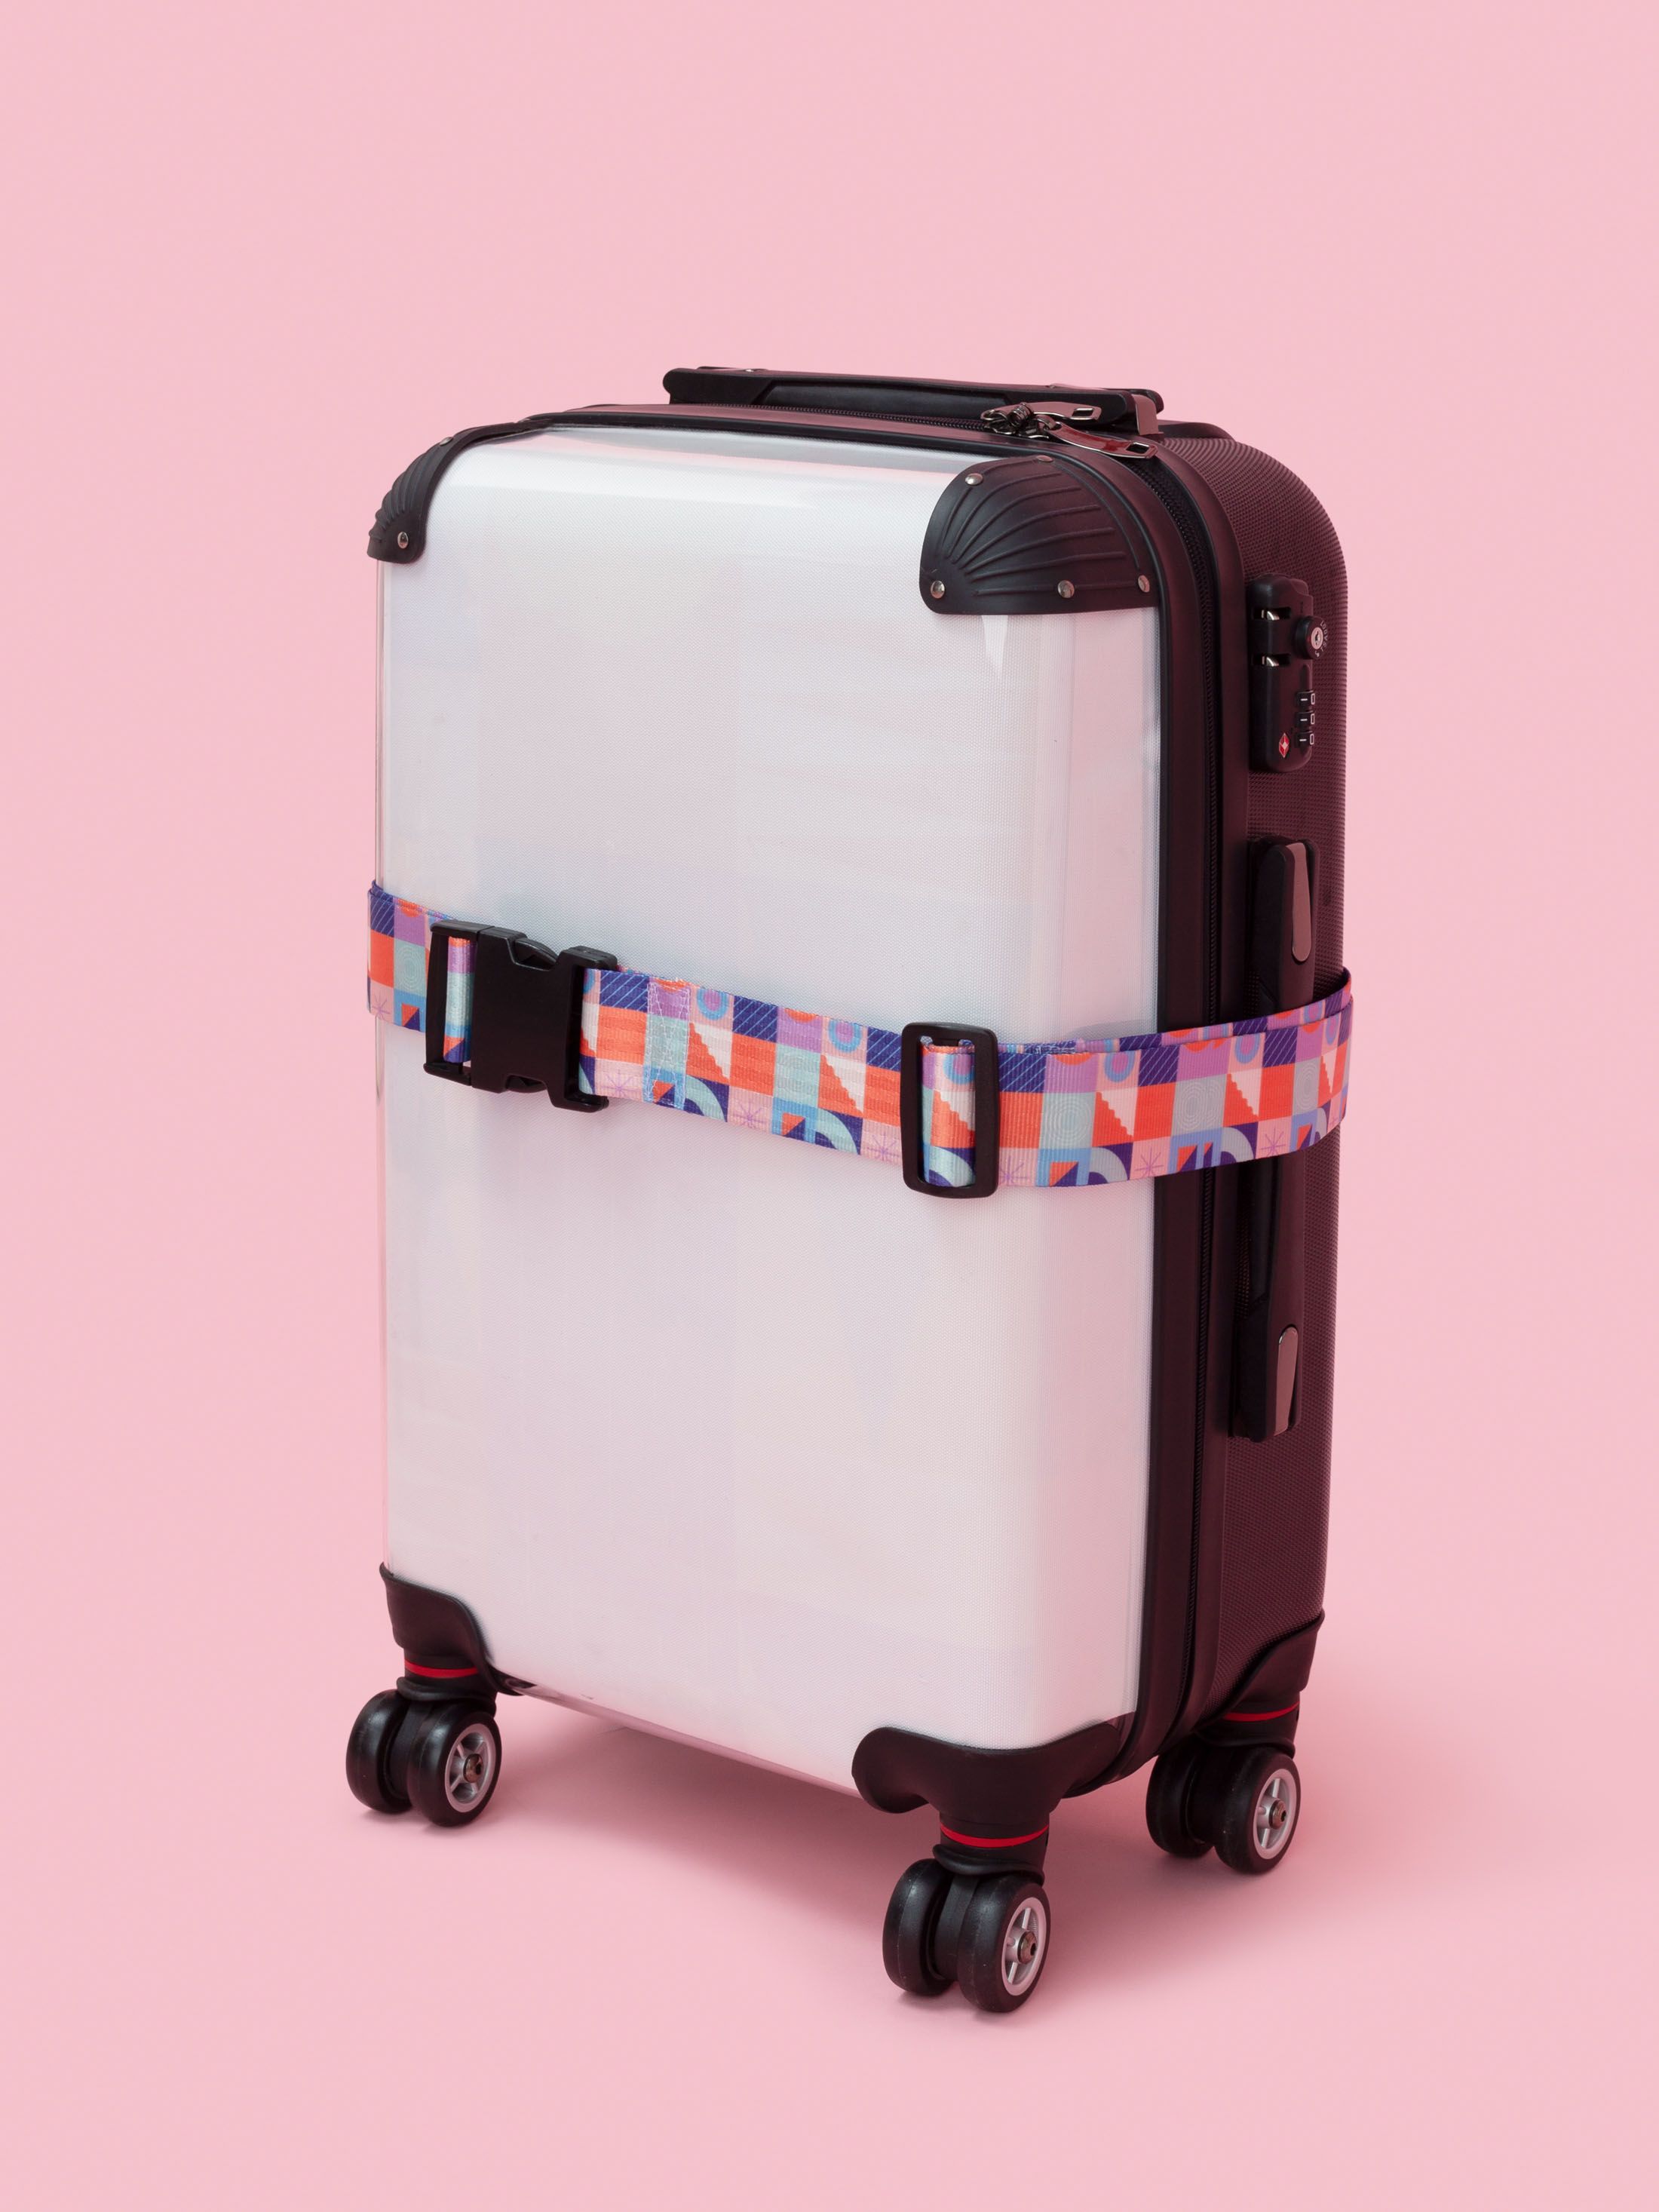 Suitcase Straps Customized Luggage Straps. Personalized Luggage Straps